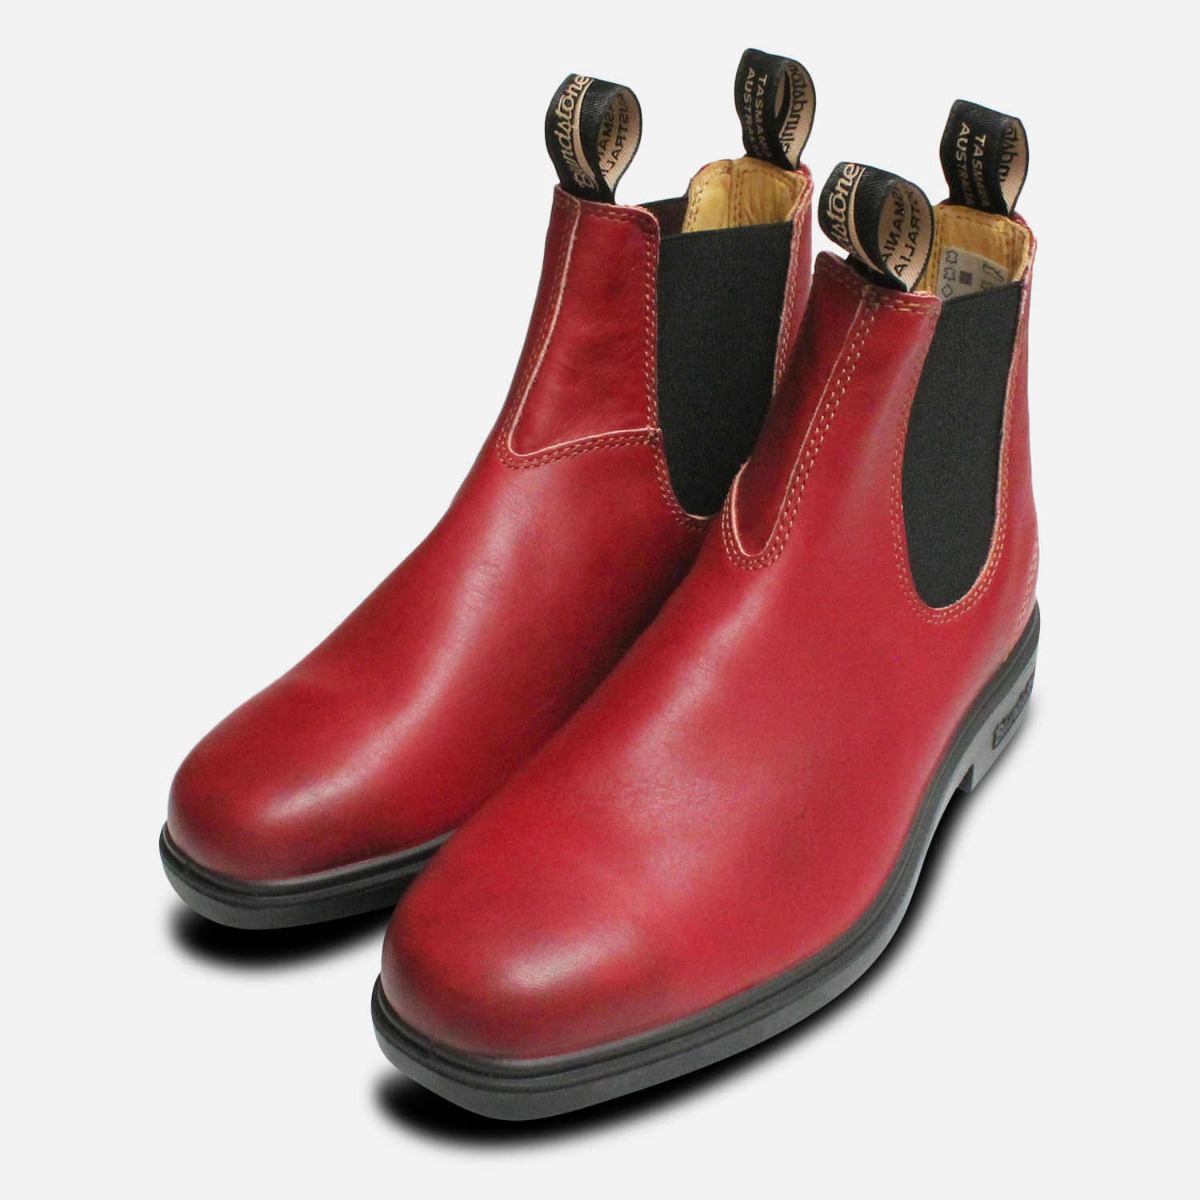 rubber sole boots ladies